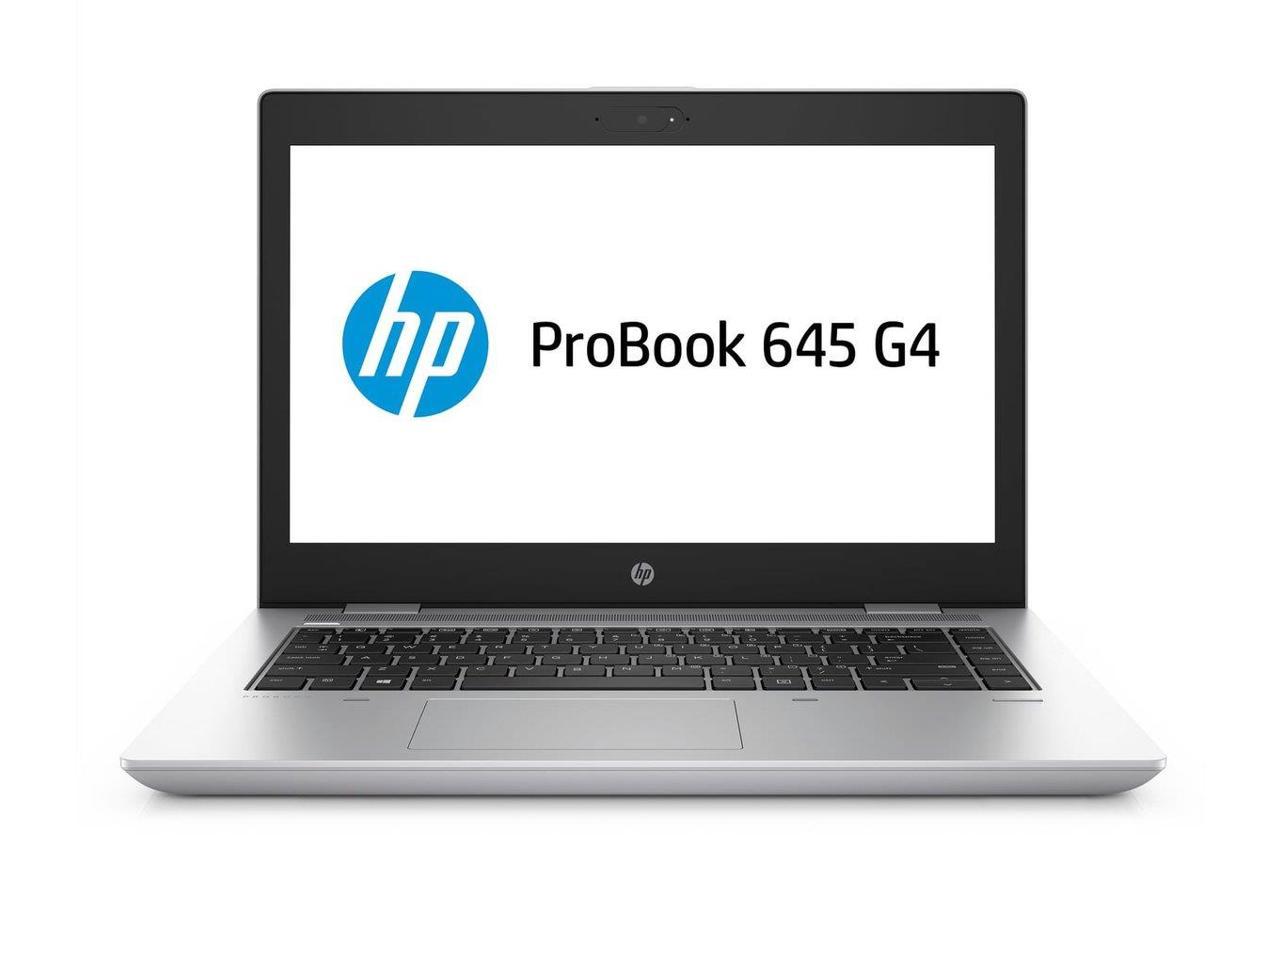 HP Laptop ProBook 645 G4 (4LB42UT#ABA) AMD Ryzen 7 2700U (2.20 GHz) 8 GB Memory 256 GB PCIe NVMe SSD AMD Radeon RX Vega 10 14.0